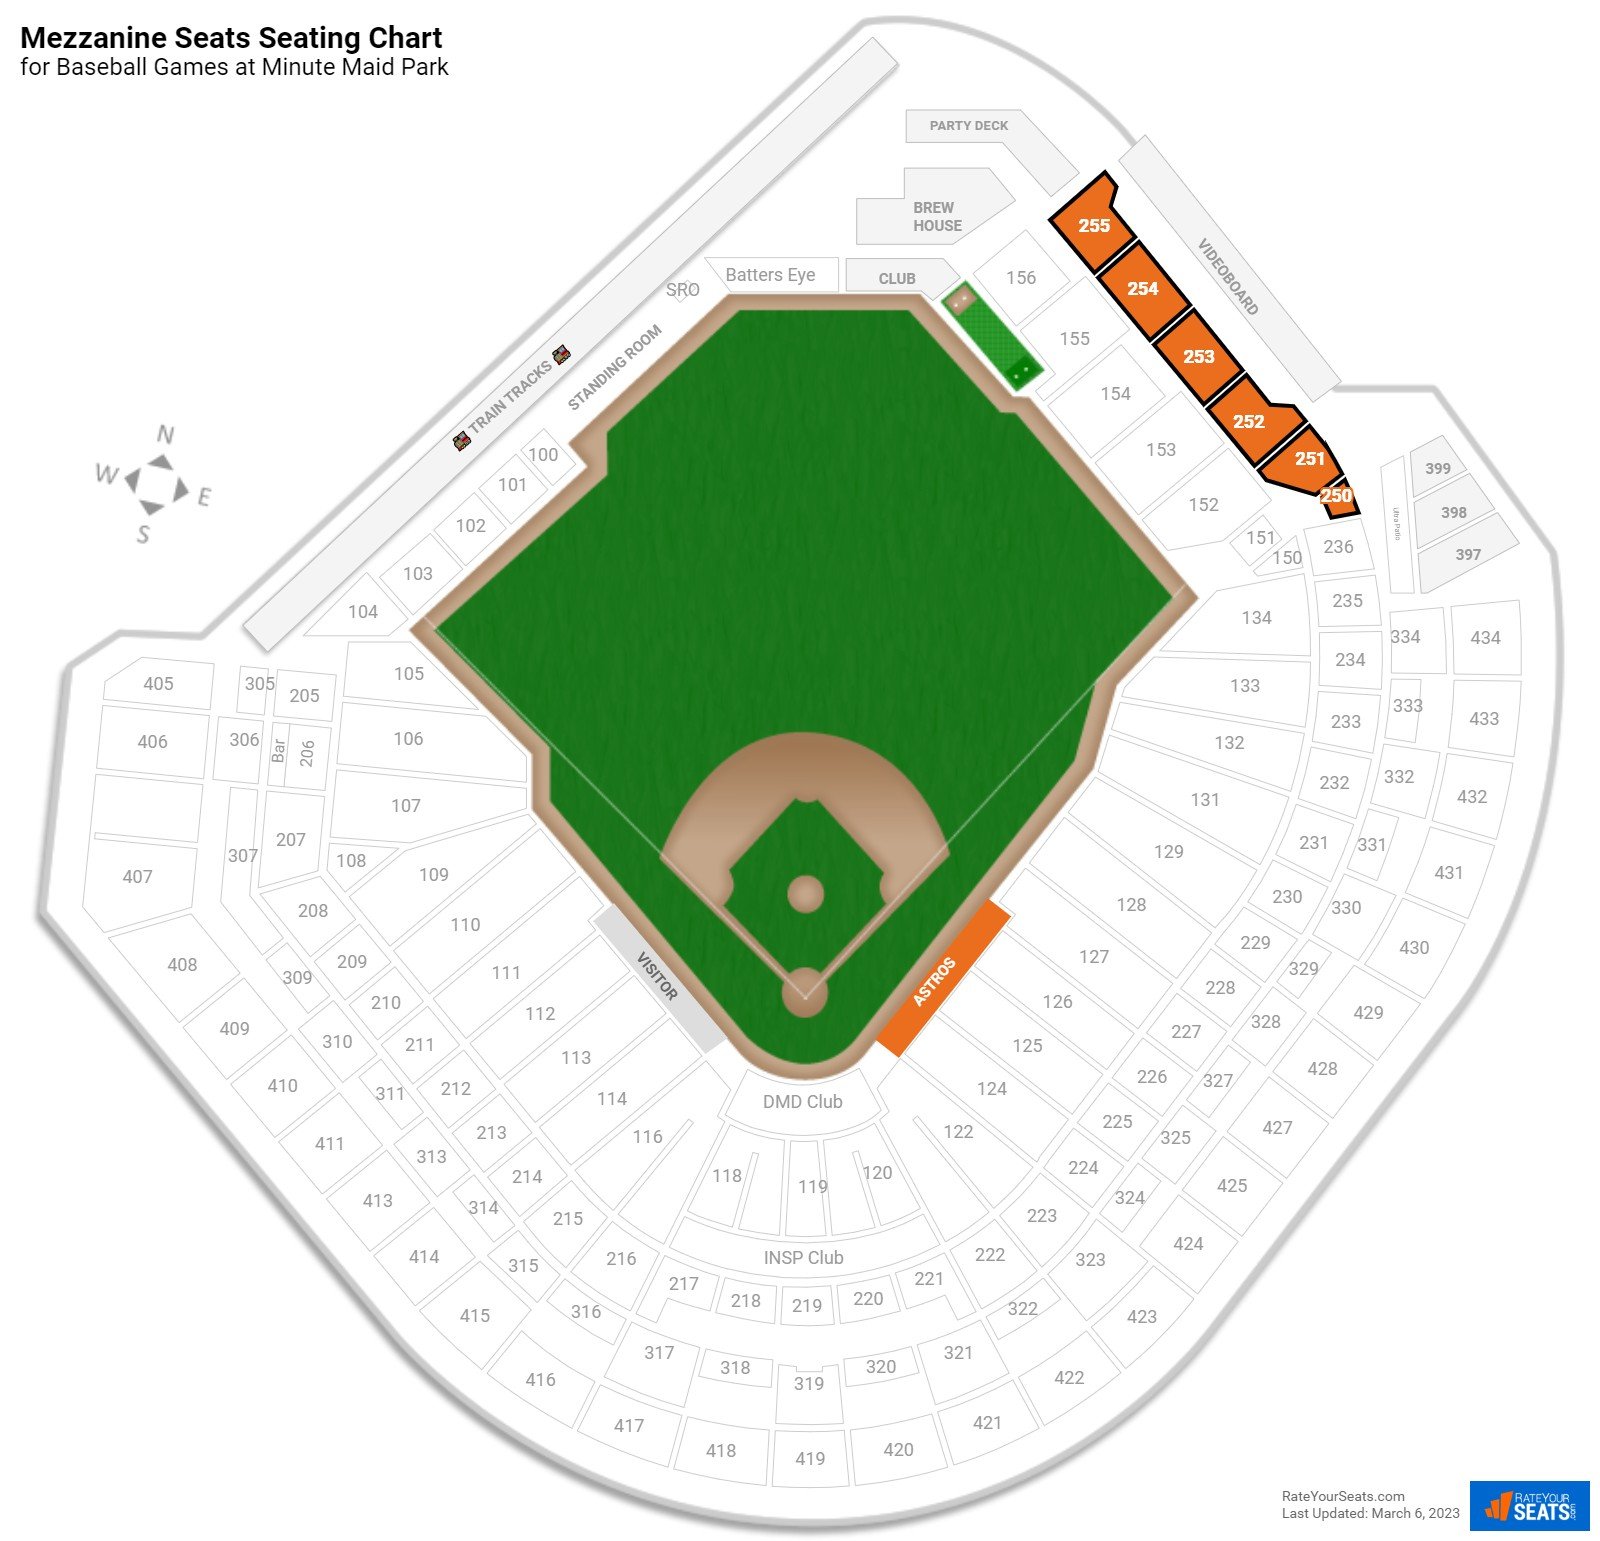 Baseball Mezzanine Seats Seating Chart at Minute Maid Park